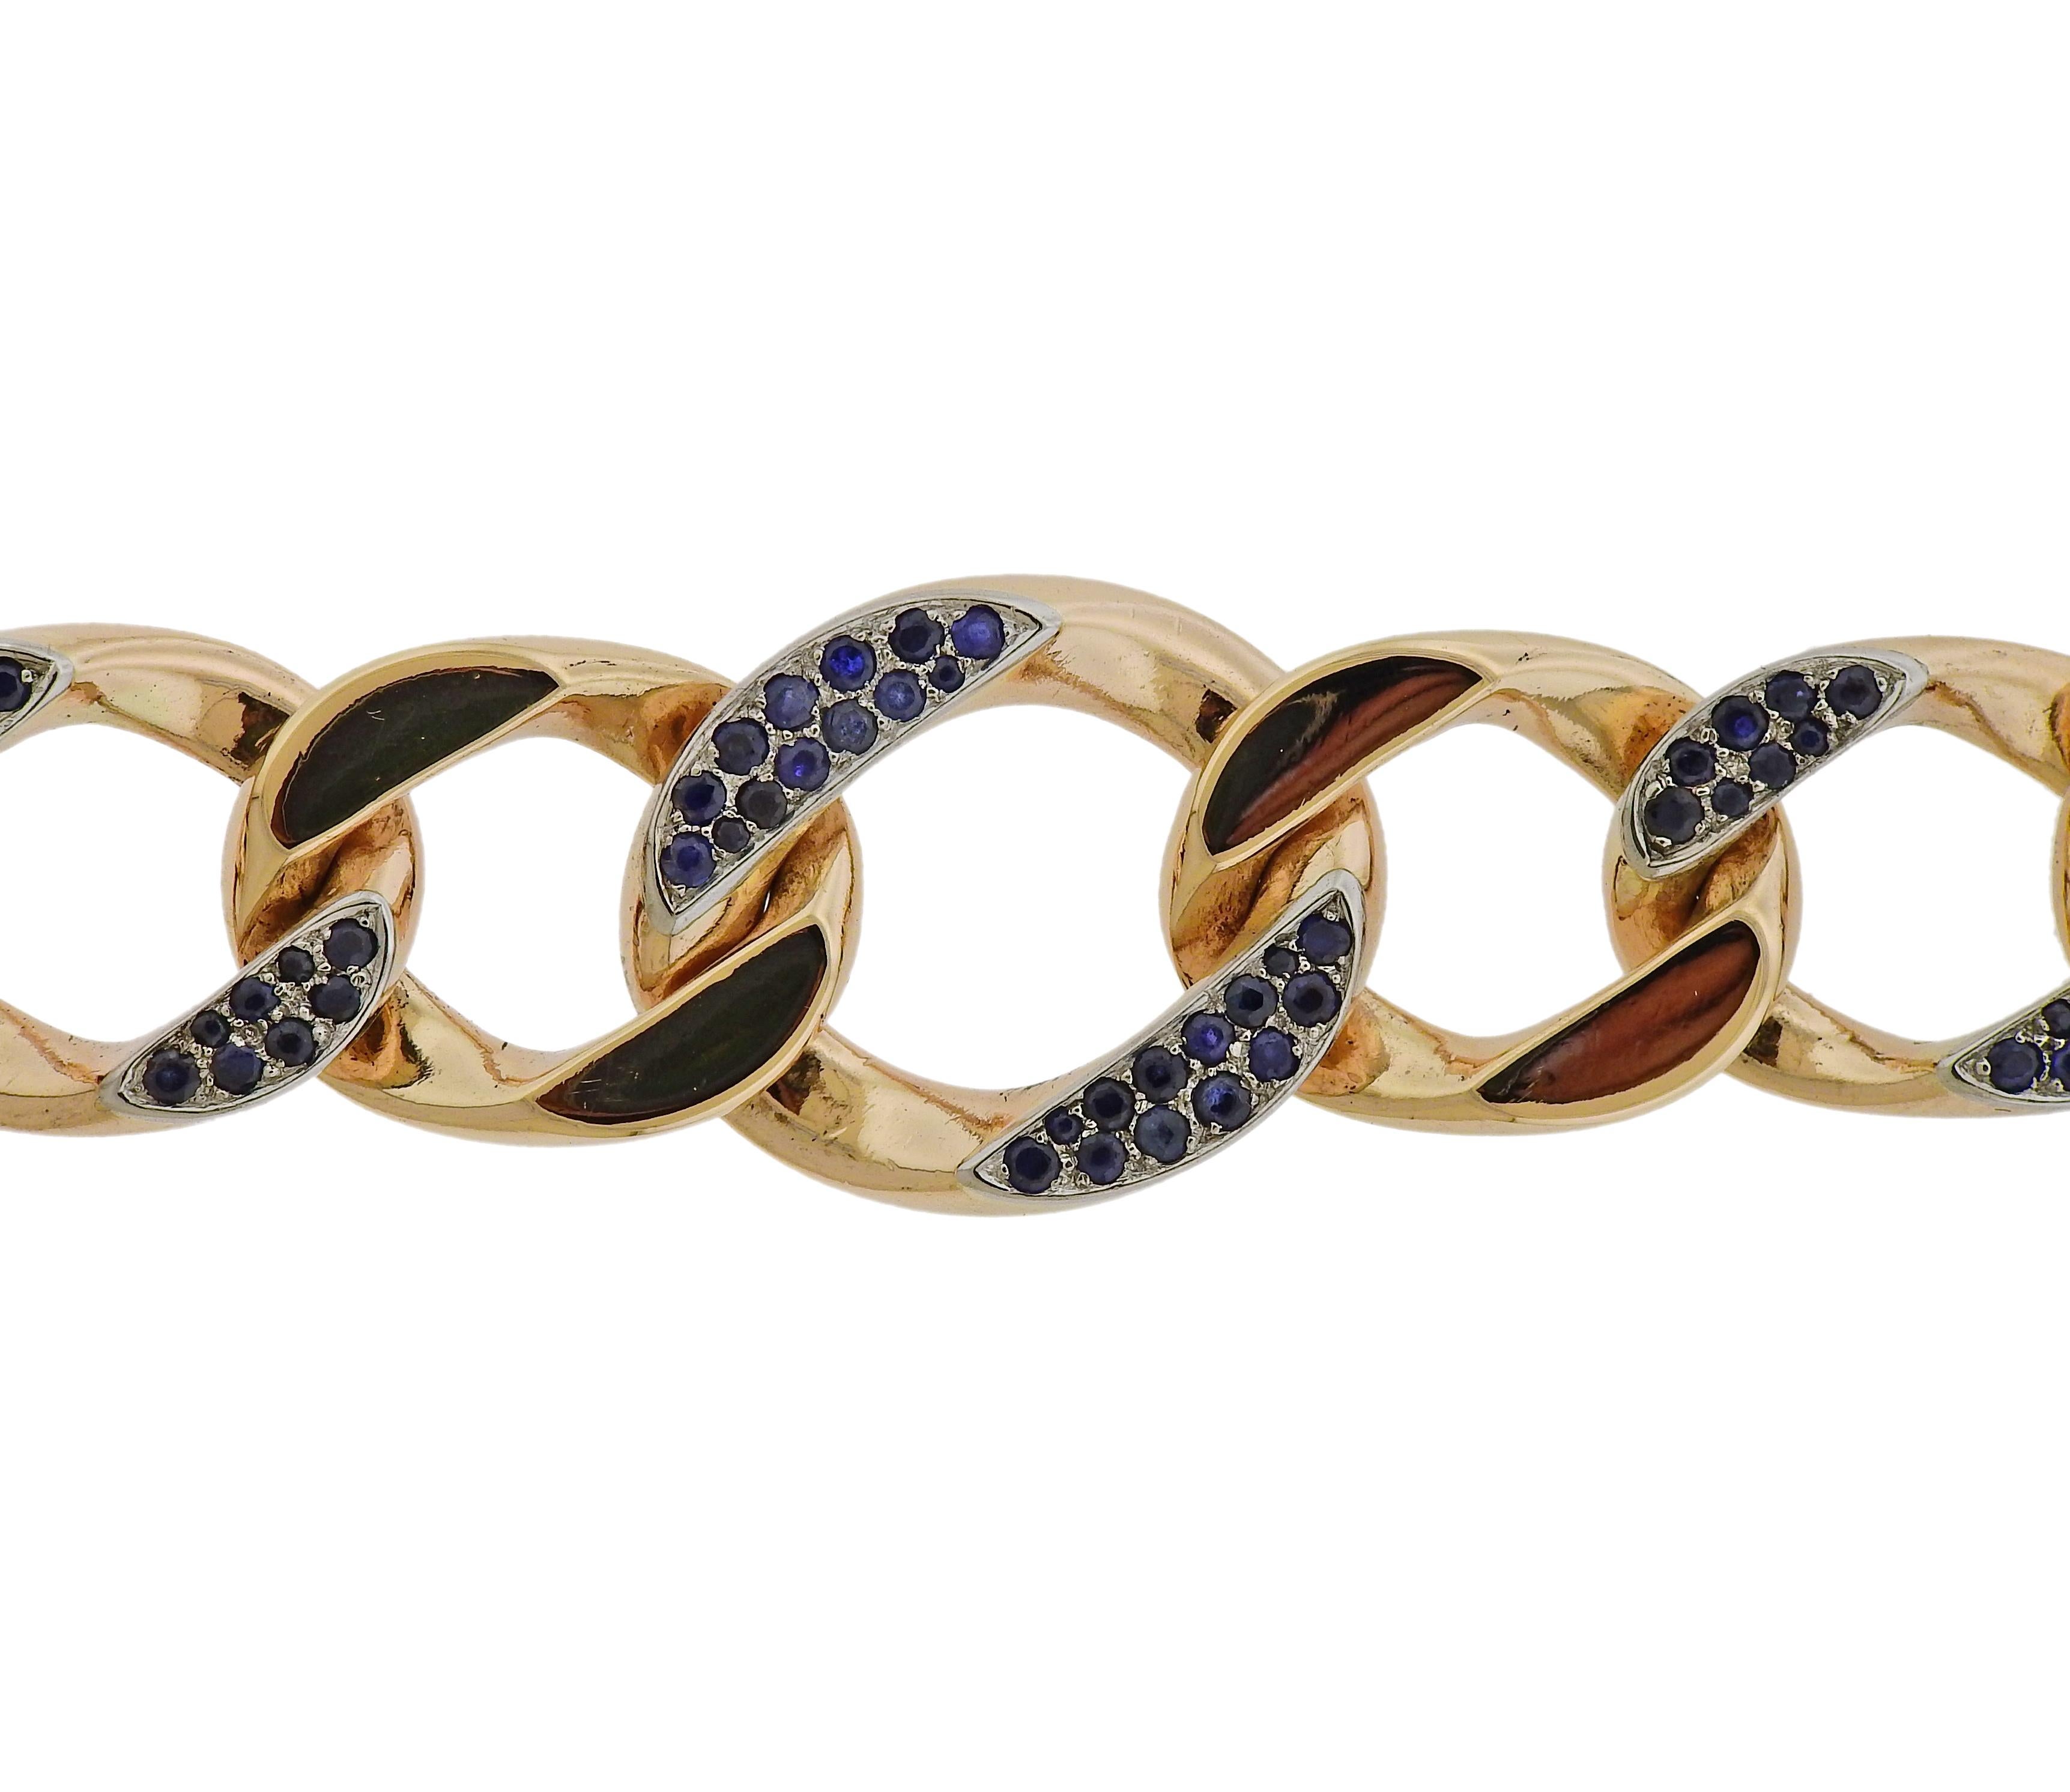 Vintage circa 1940s 14k gold curb link bracelet by Seaman Schepps, set with blue sapphires.  Bracelet is 7 34